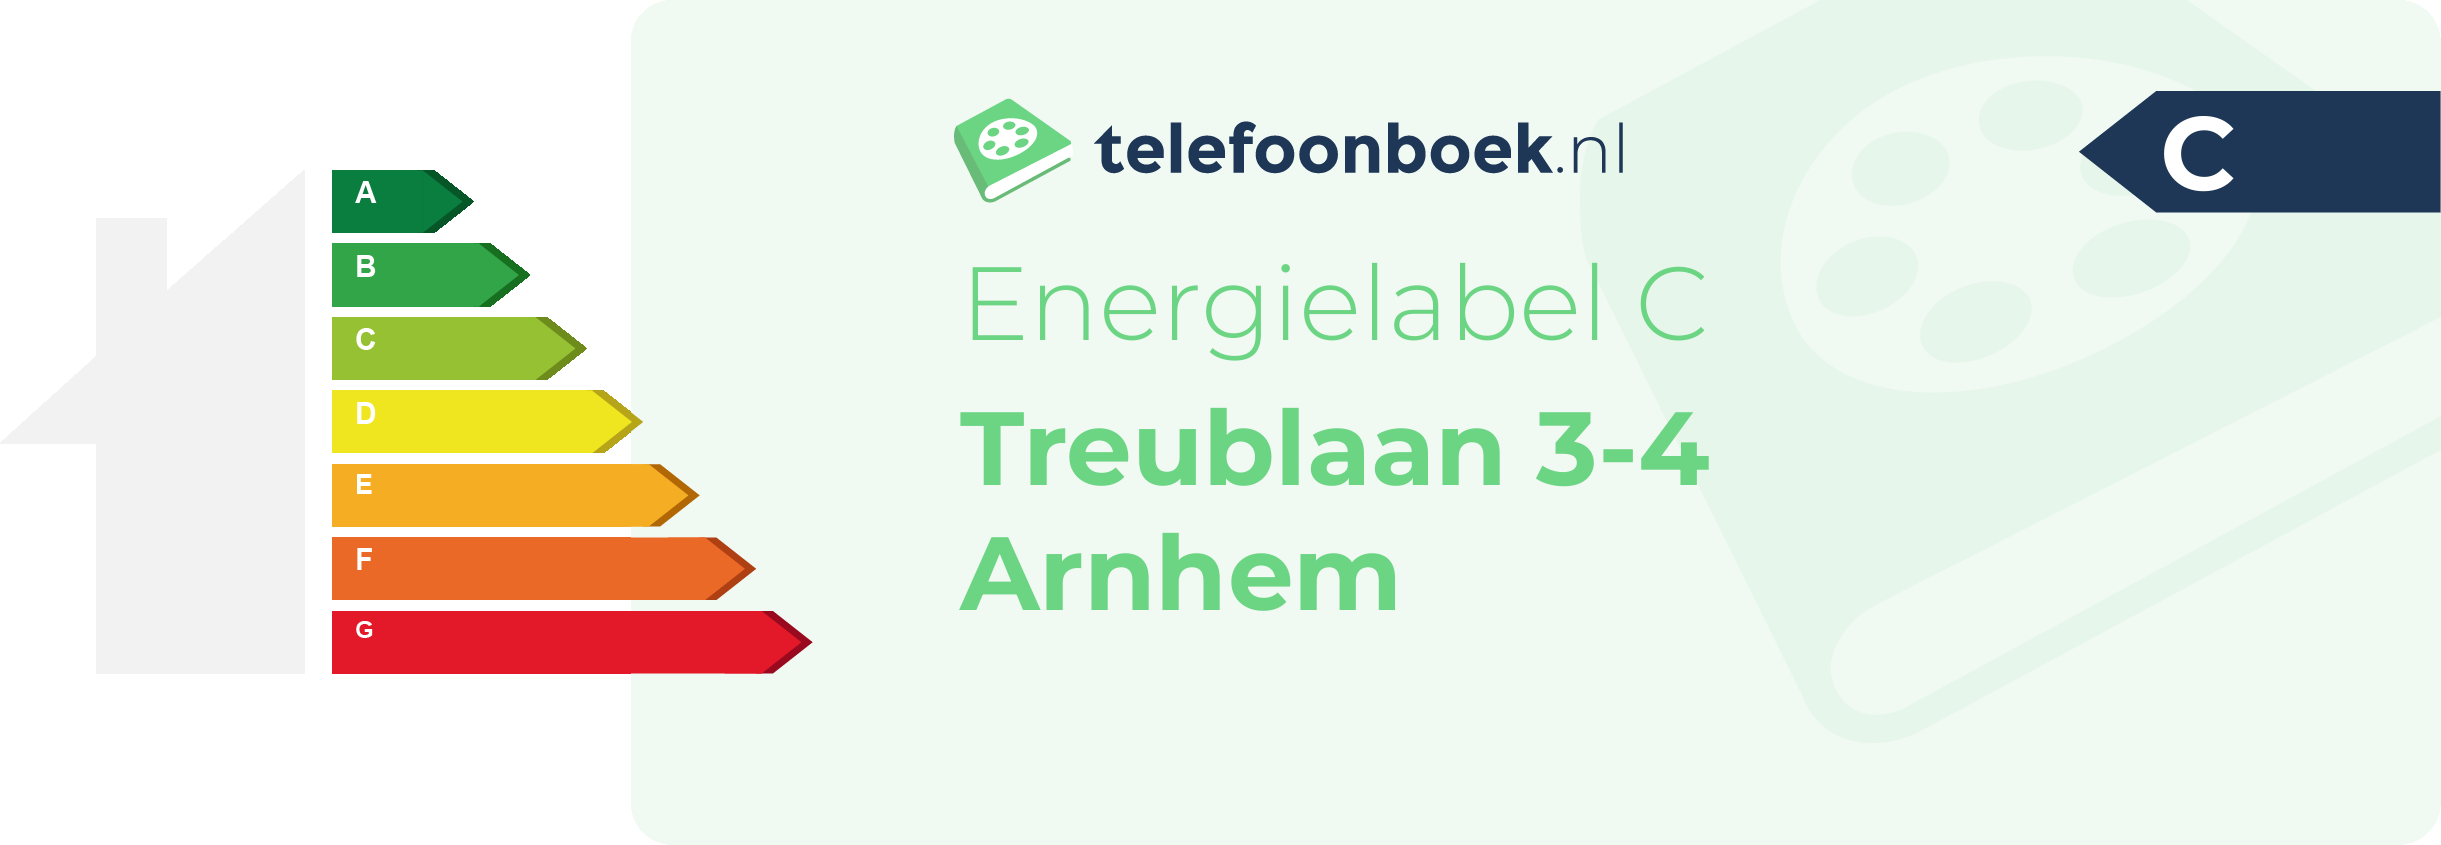 Energielabel Treublaan 3-4 Arnhem